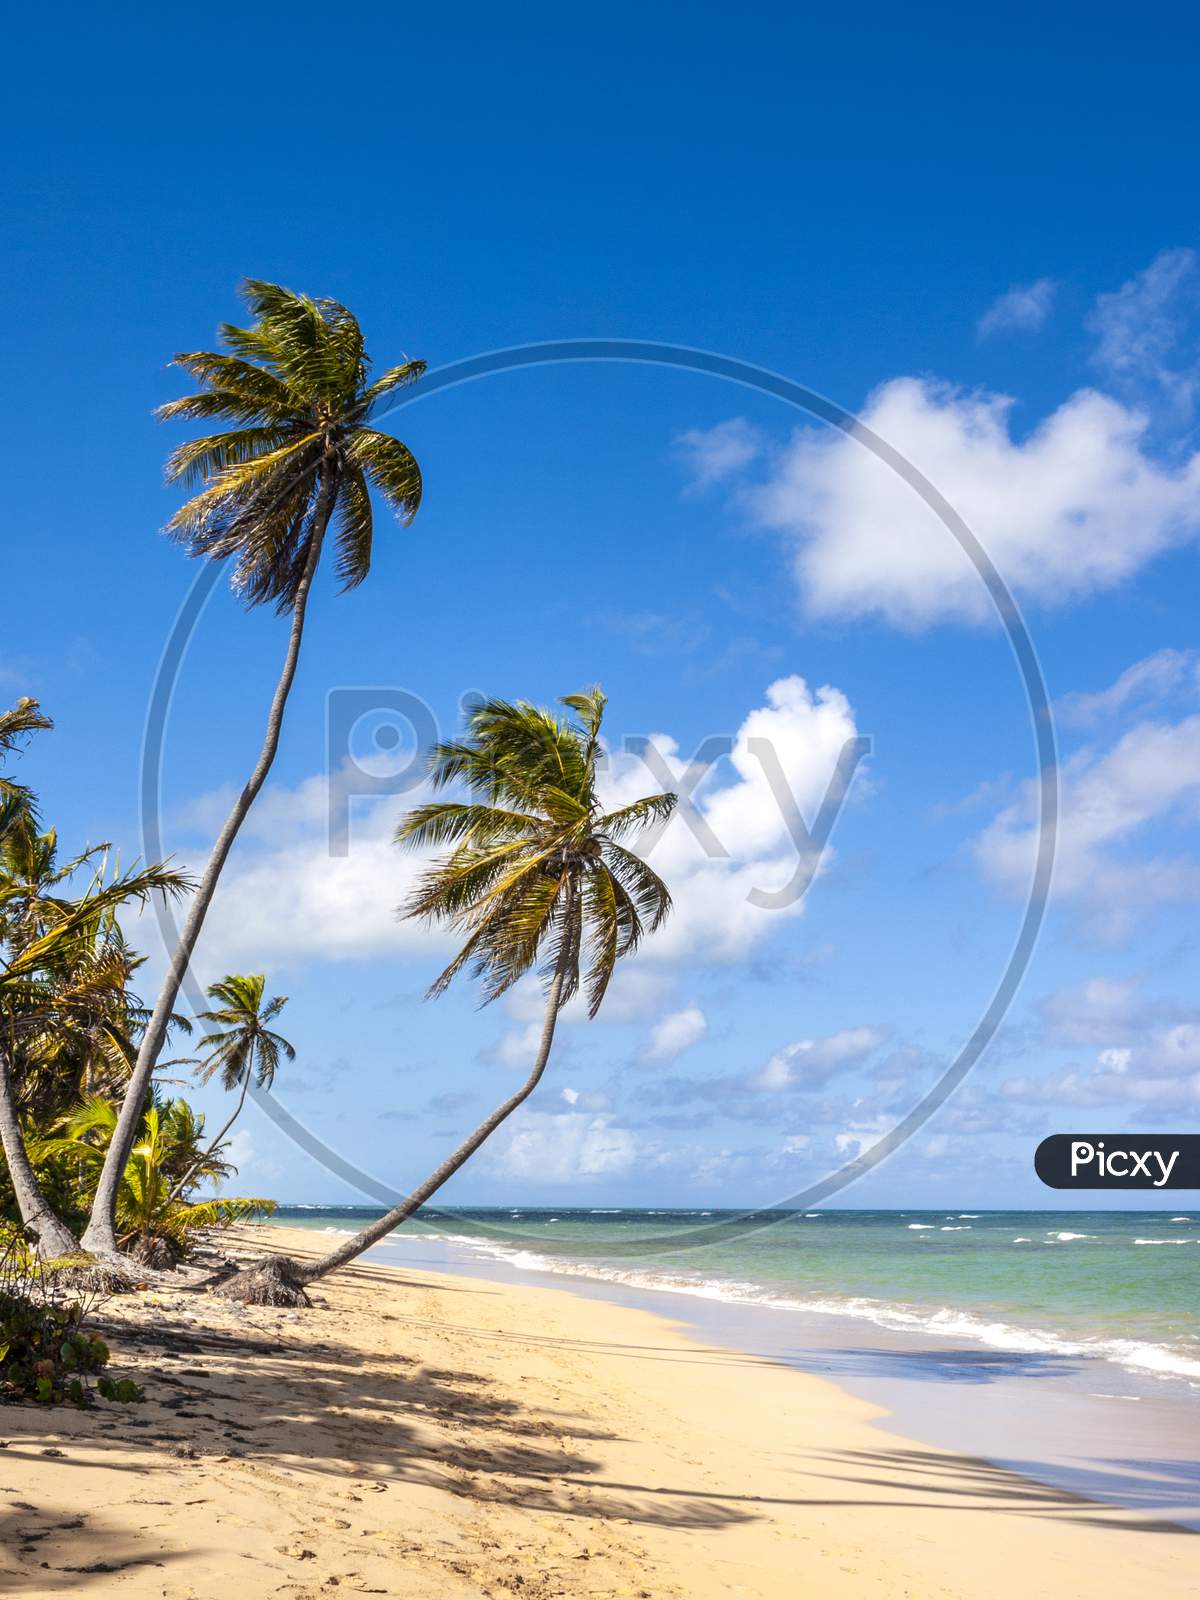 A Caribbean beach with palm trees and blue sky